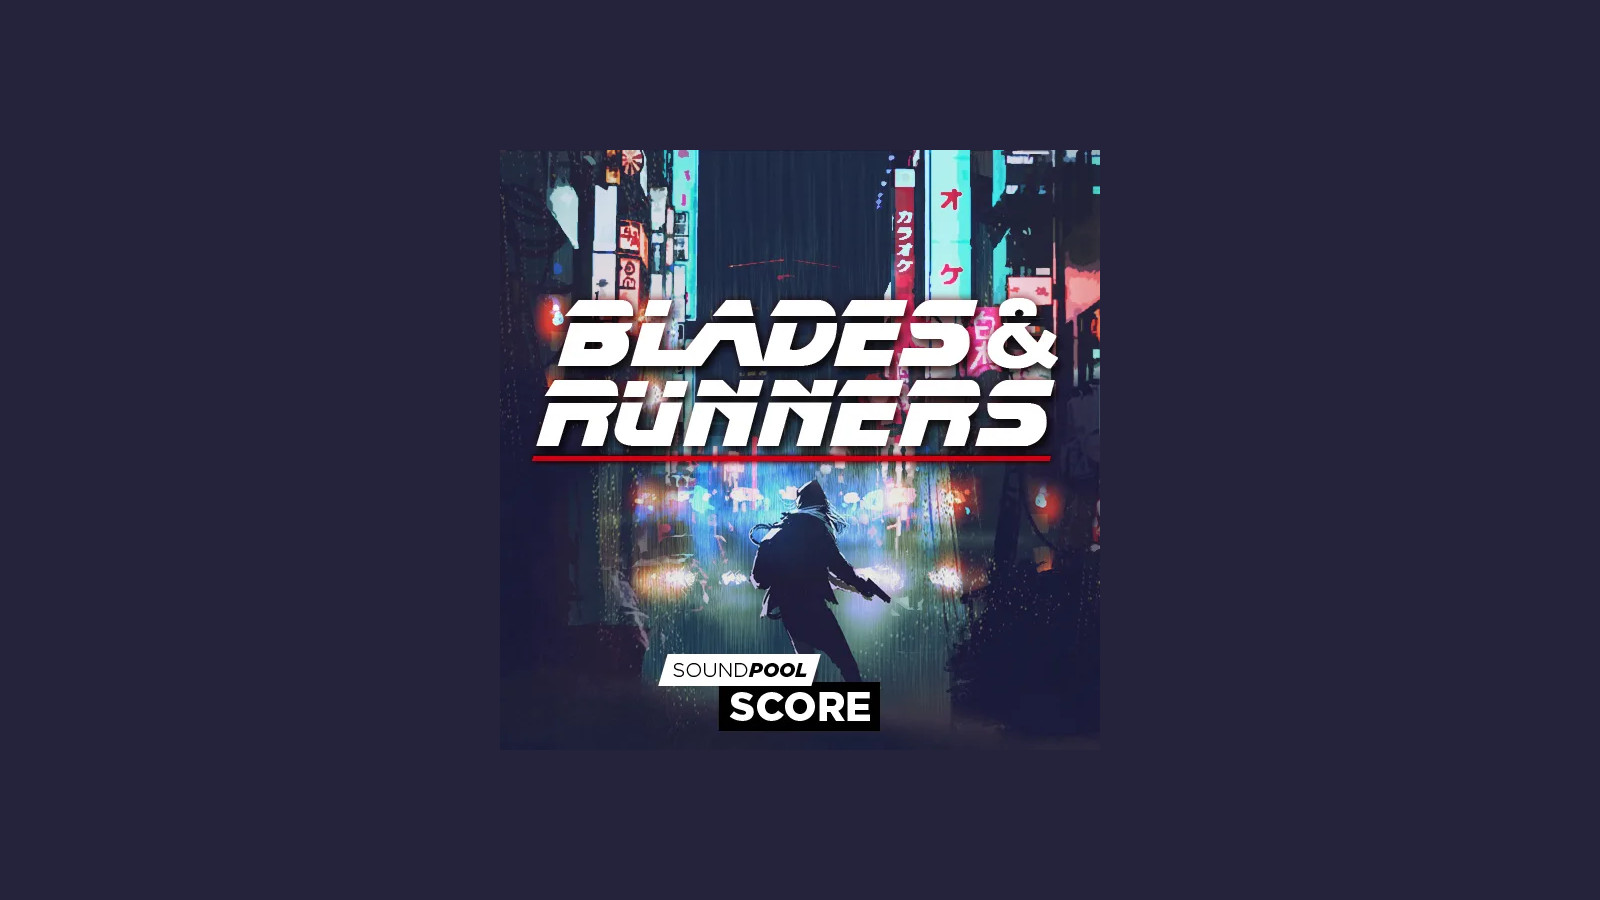 MAGIX Soundpool Blades & Runners ProducerPlanet CD Key 5.65 usd